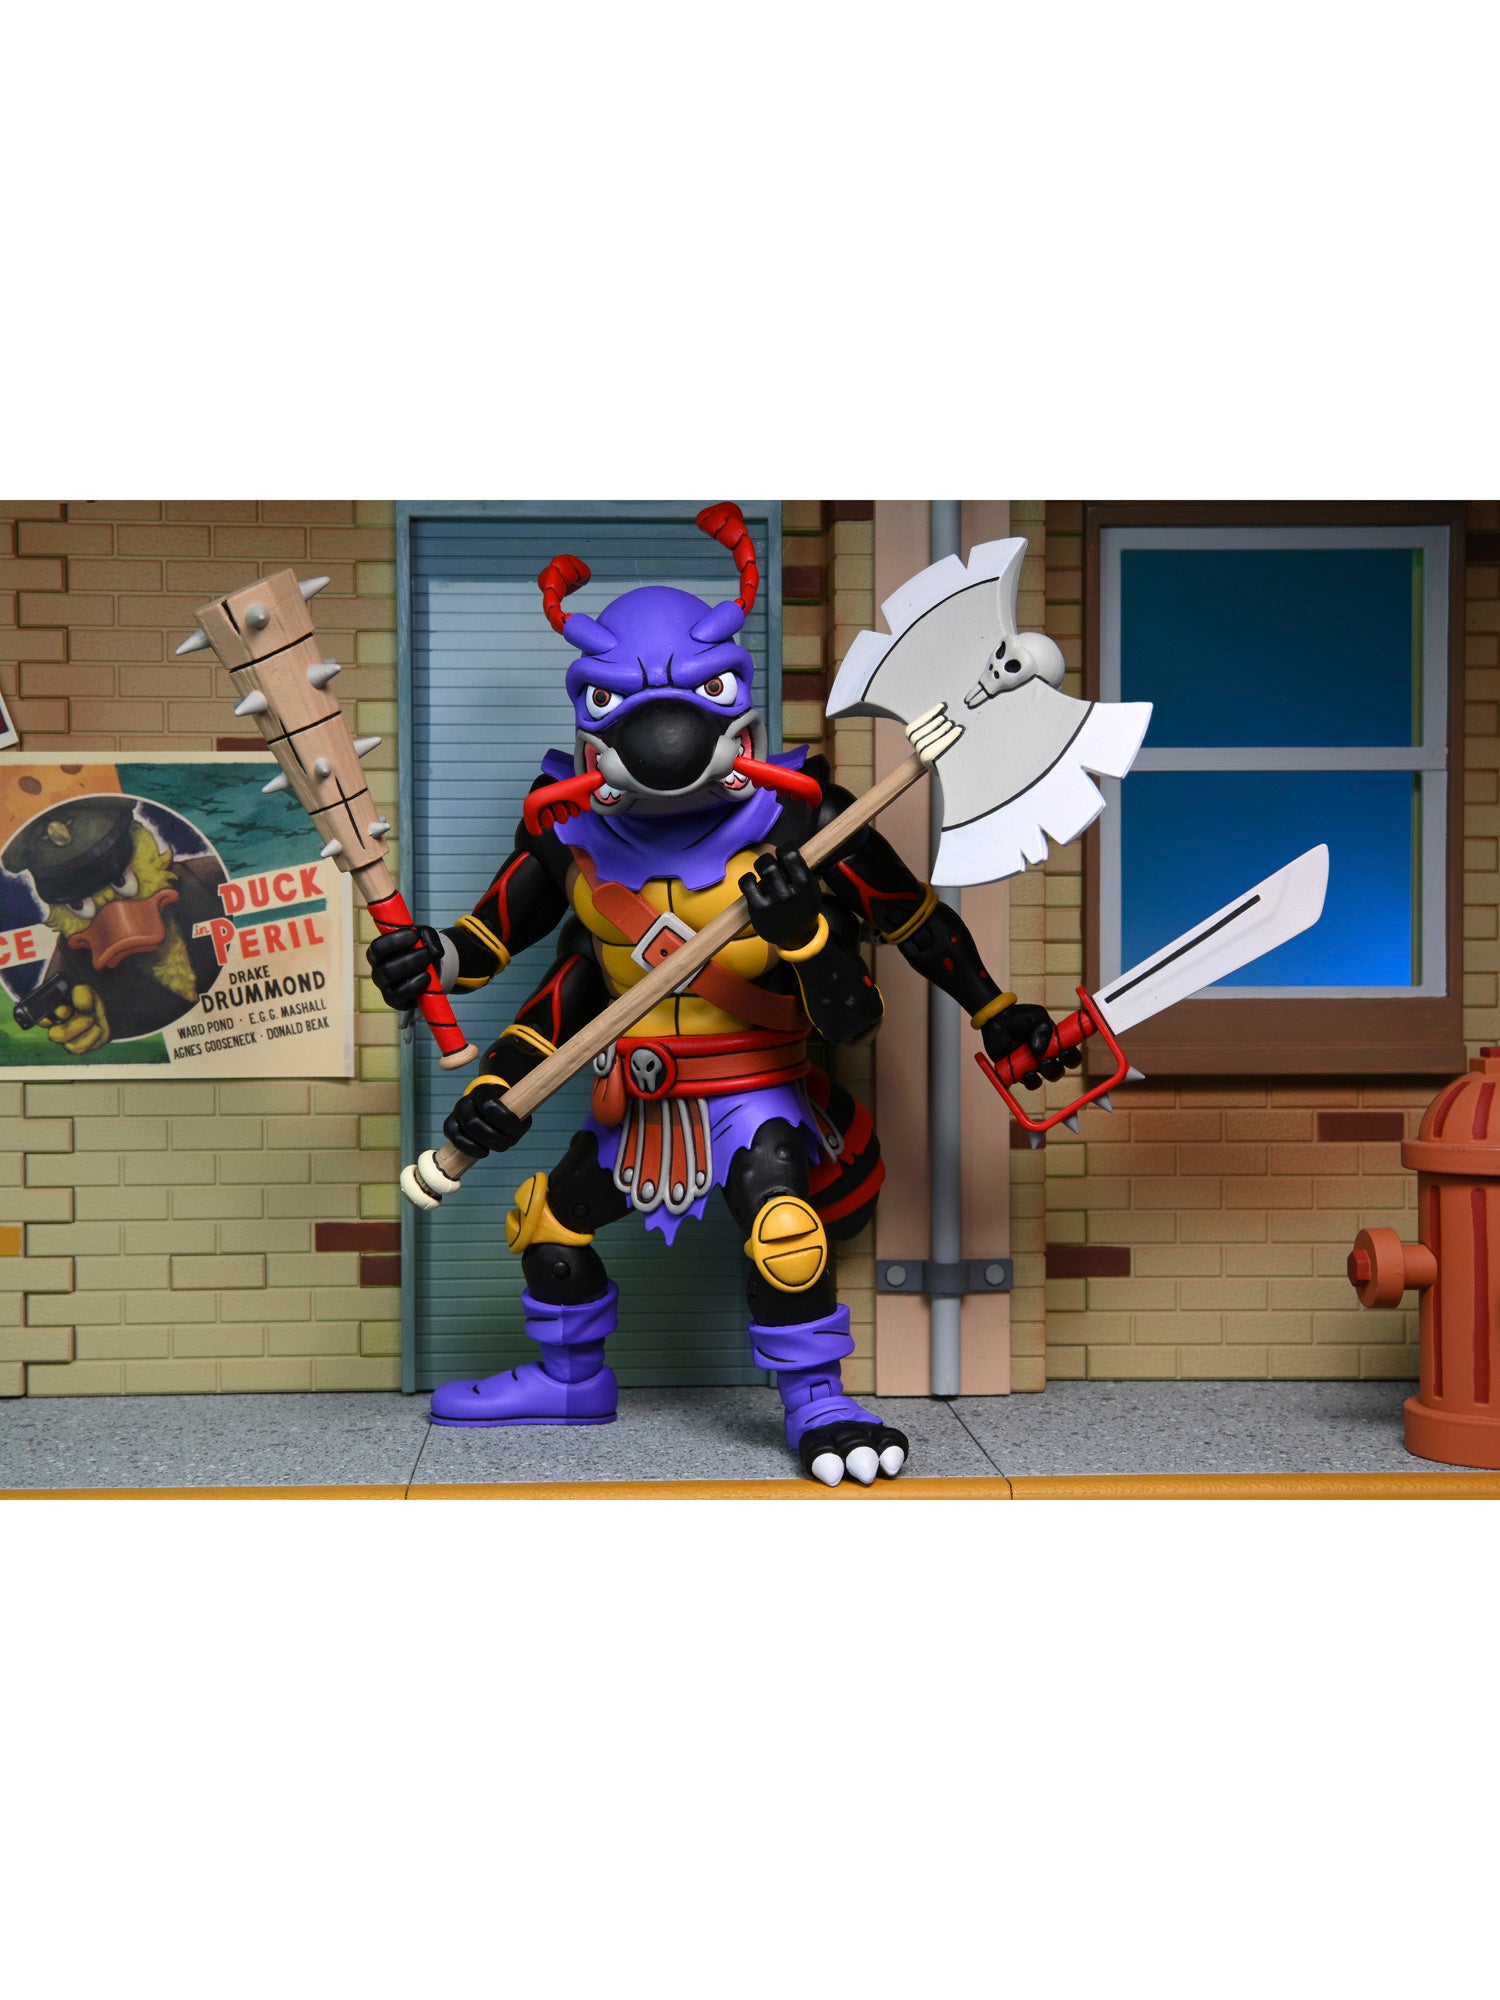 NECA - Teenage Mutant Ninja Turtles (Cartoon) - 7" Scale Action Figure - Antrax and Scumbug 2 Pack - costumes.com